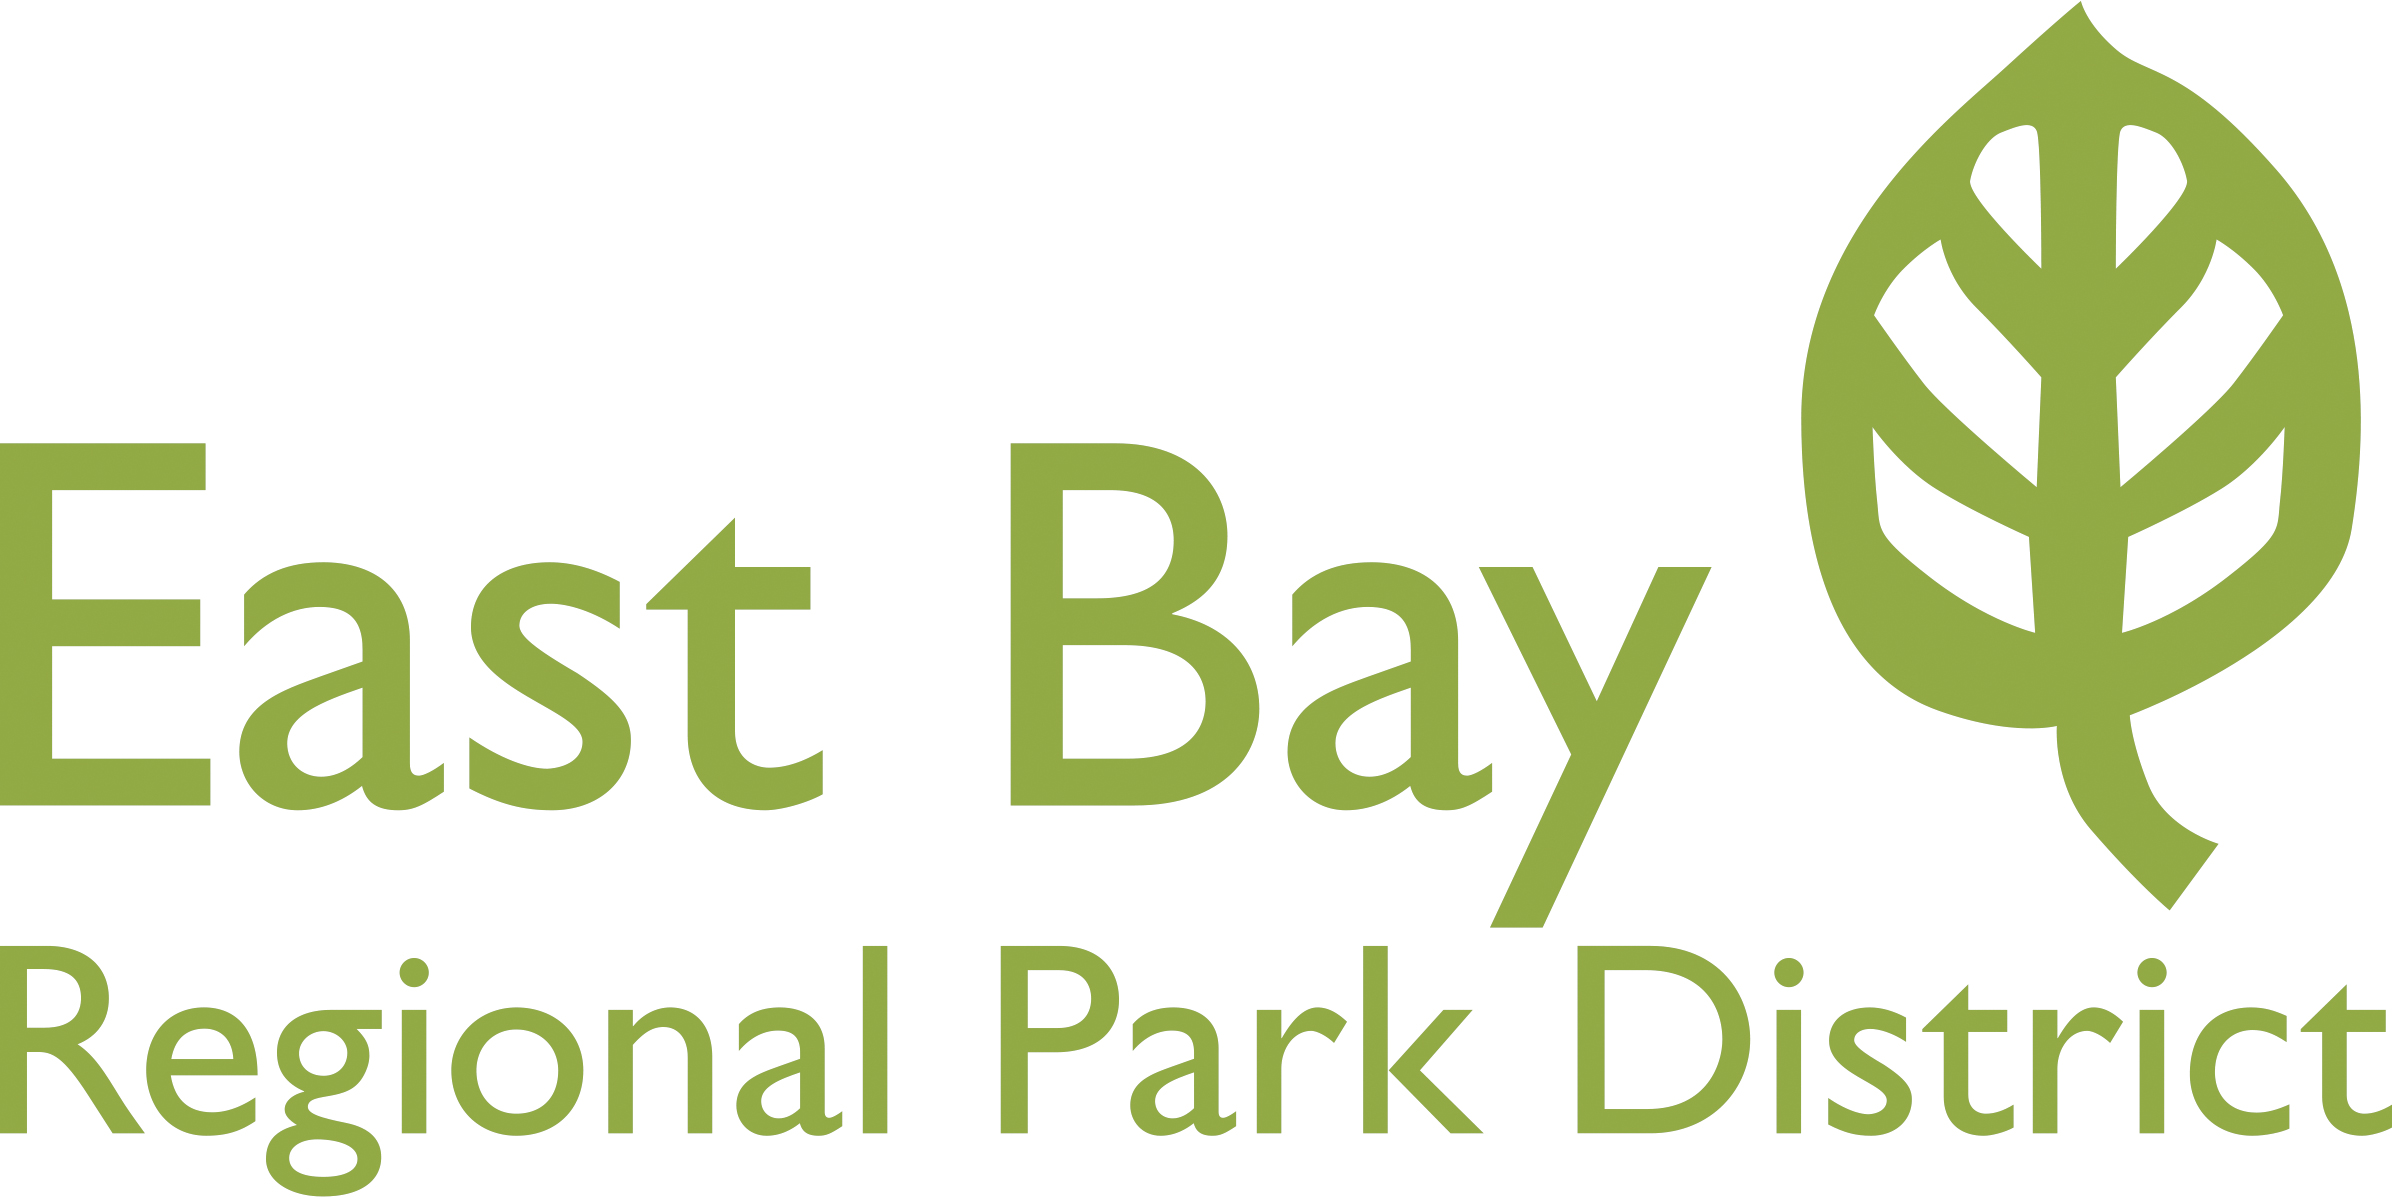 The East Bay Regional Park District Logo